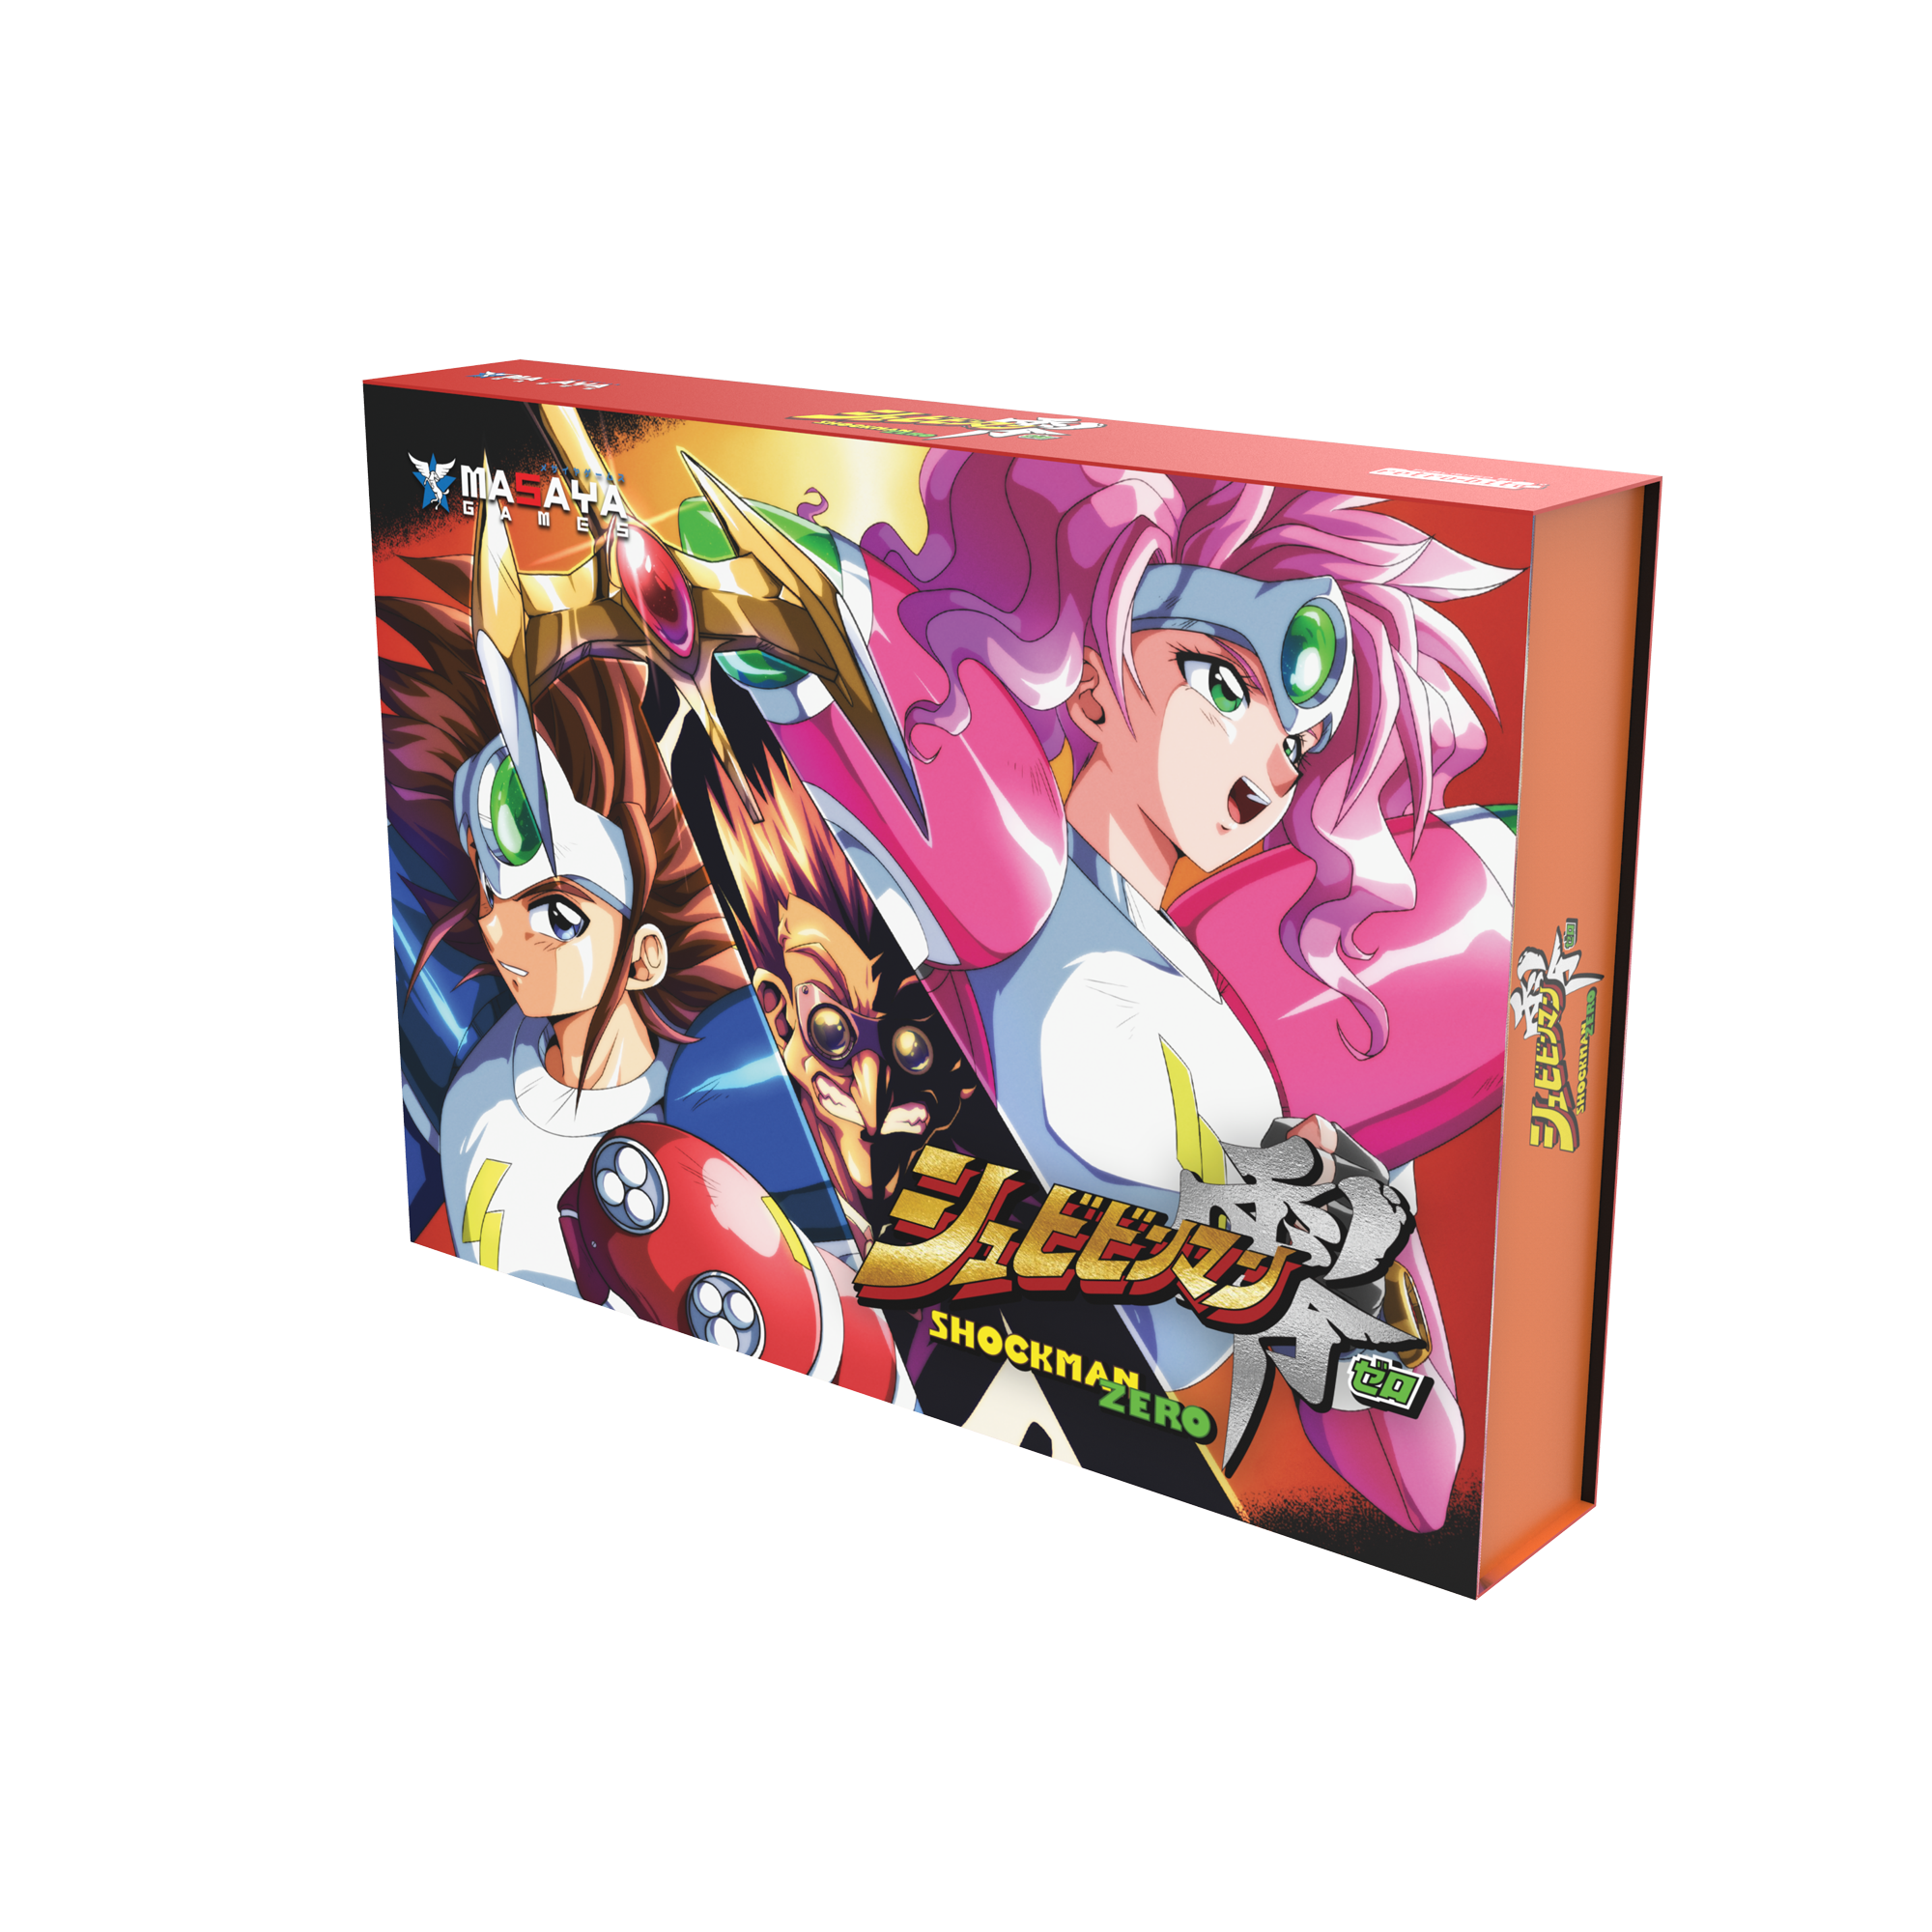 Shockman Zero Collectors Edition SNES PAL (Schibibinman Zero) - PAL Super Nintendo Cartridge - Retro-bit Publishing